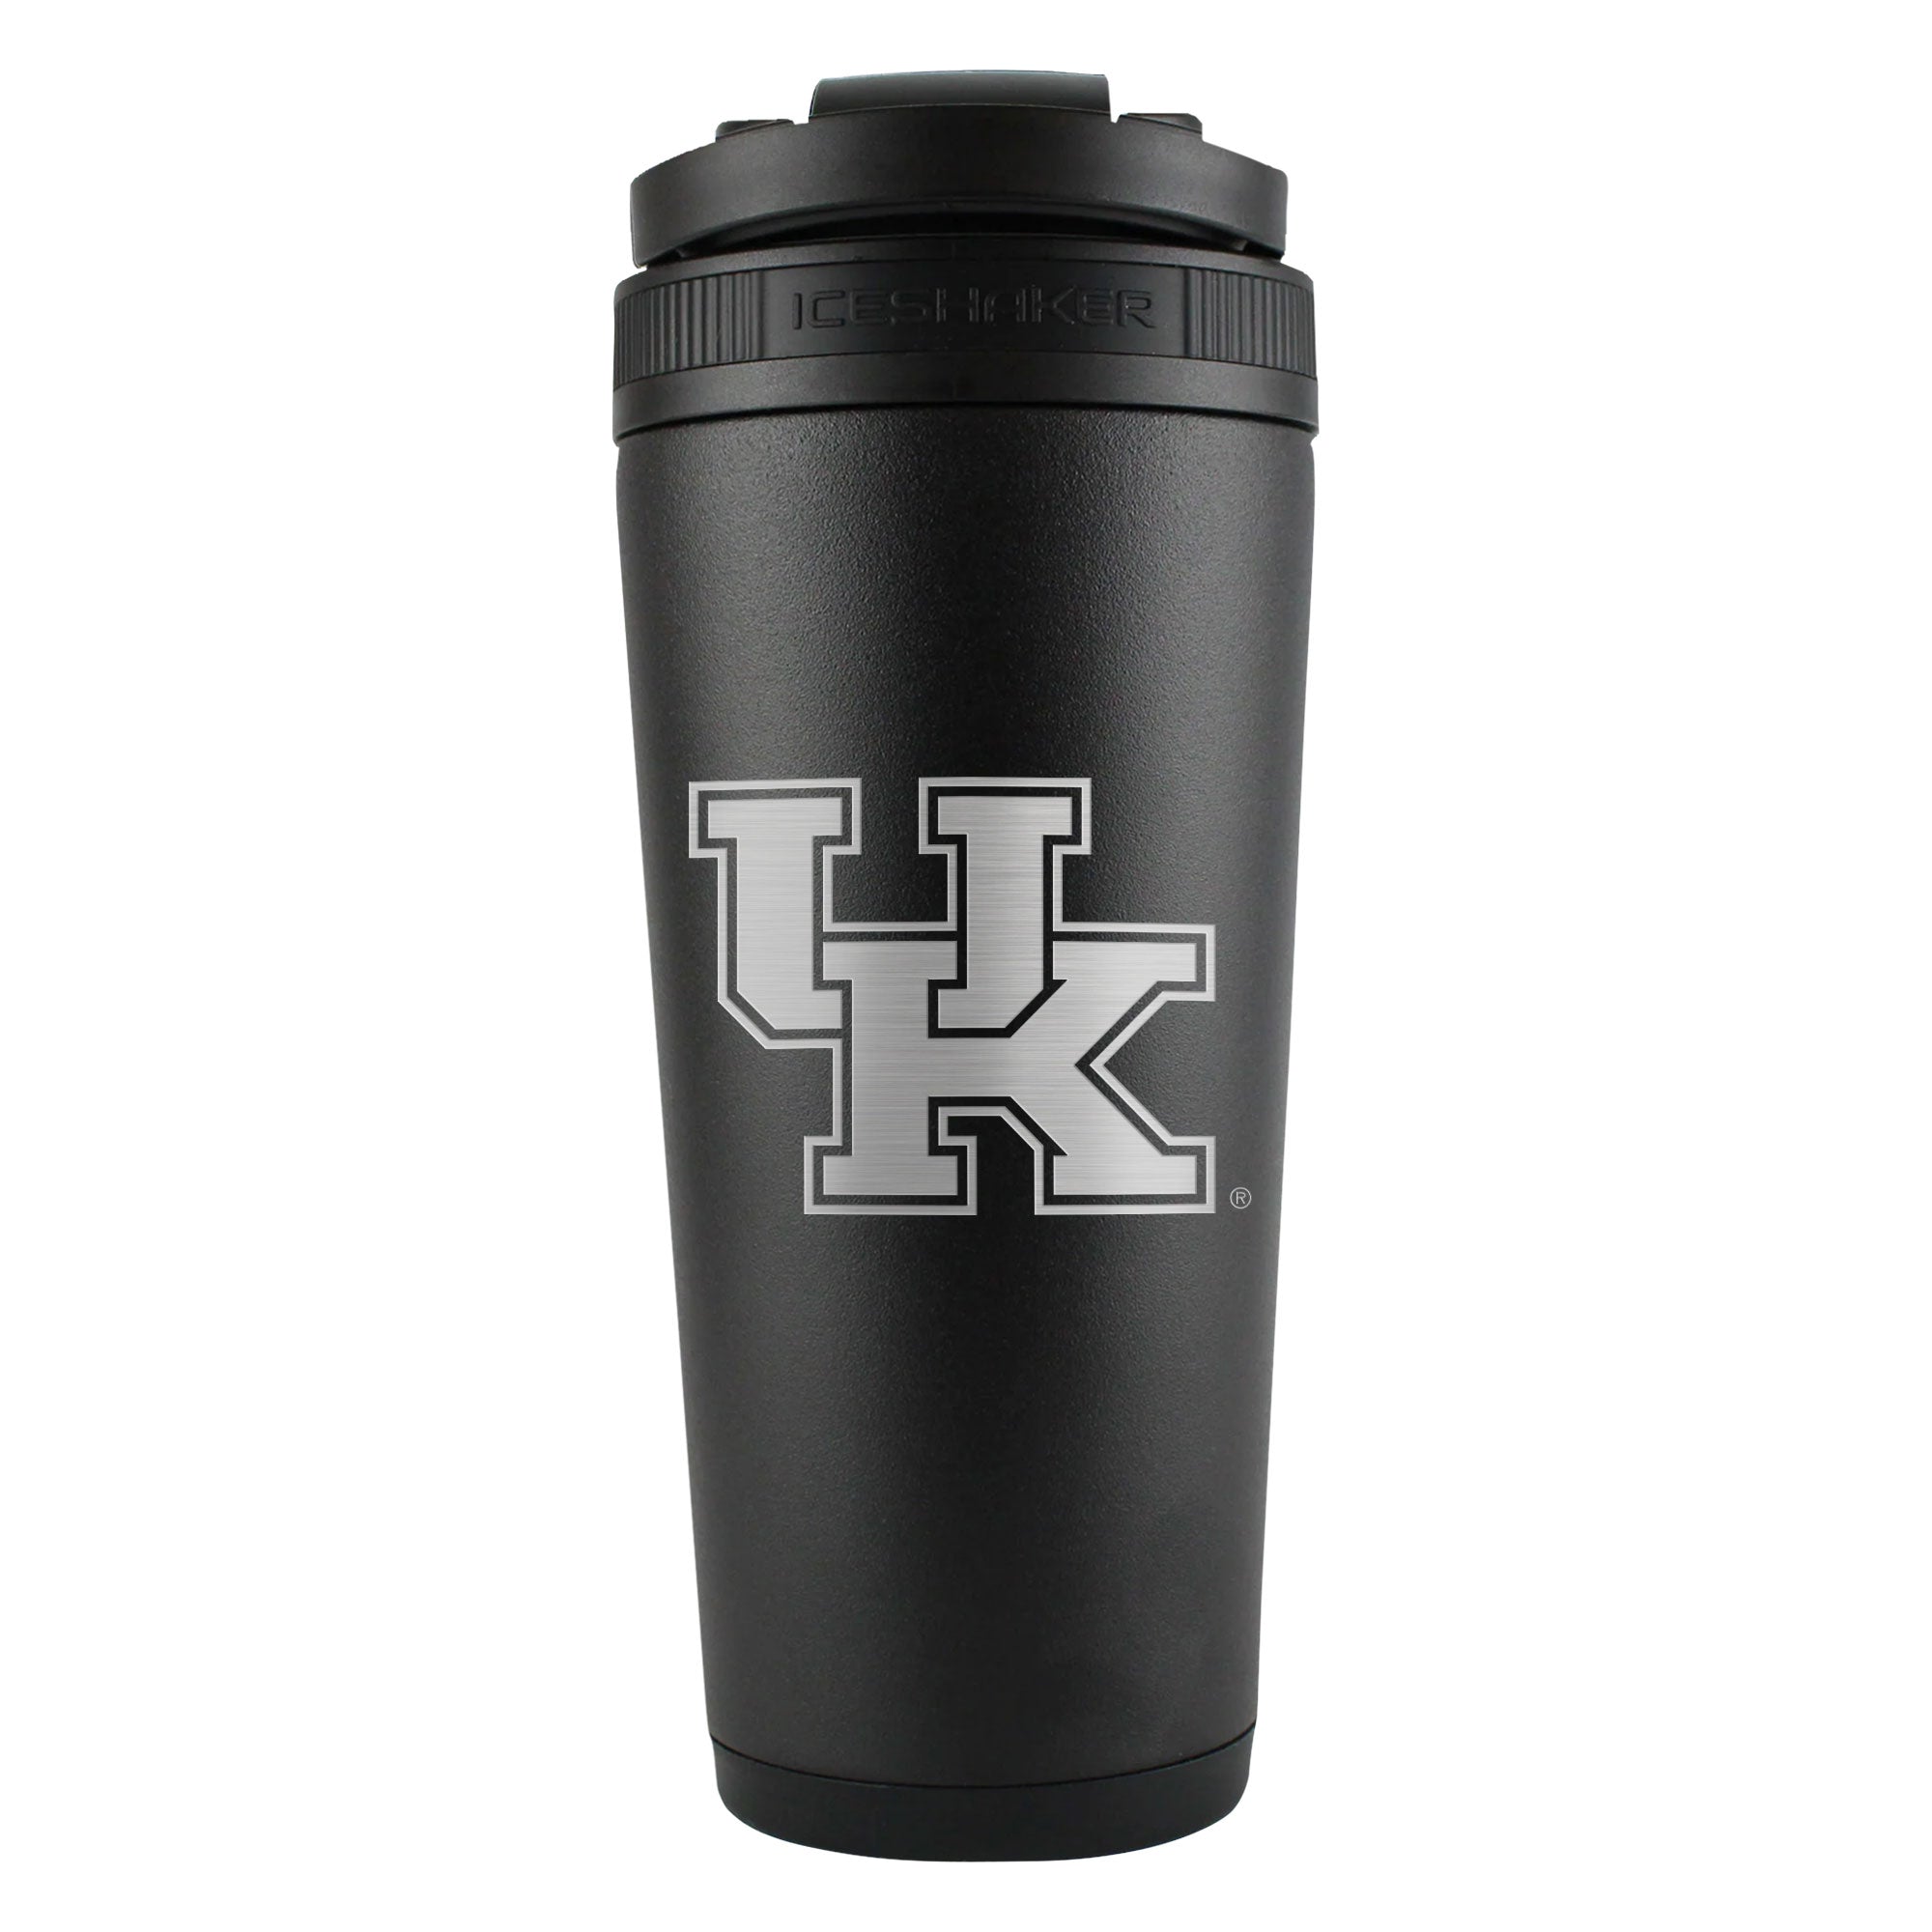 Officially Licensed University of Kentucky 26oz Ice Shaker - Black